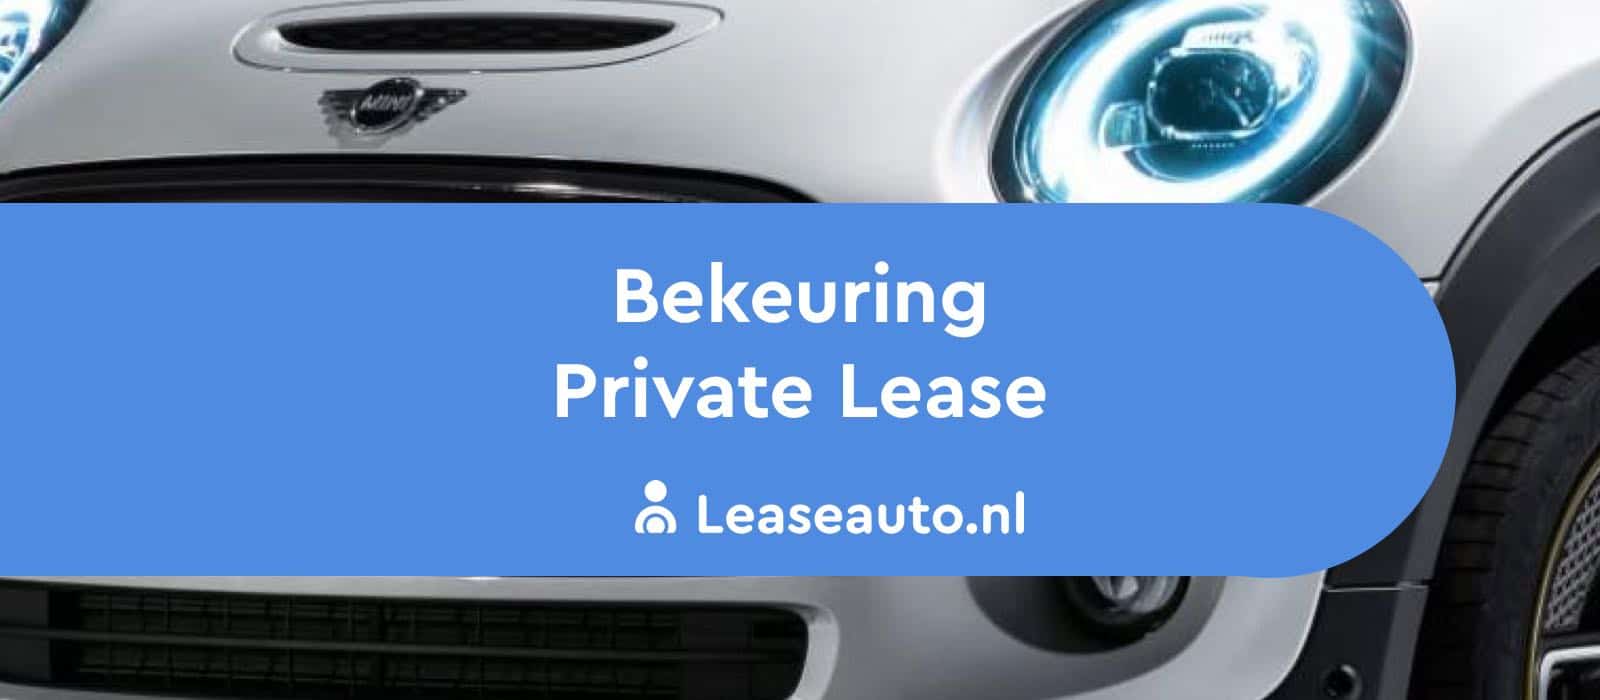 bekeuring private lease